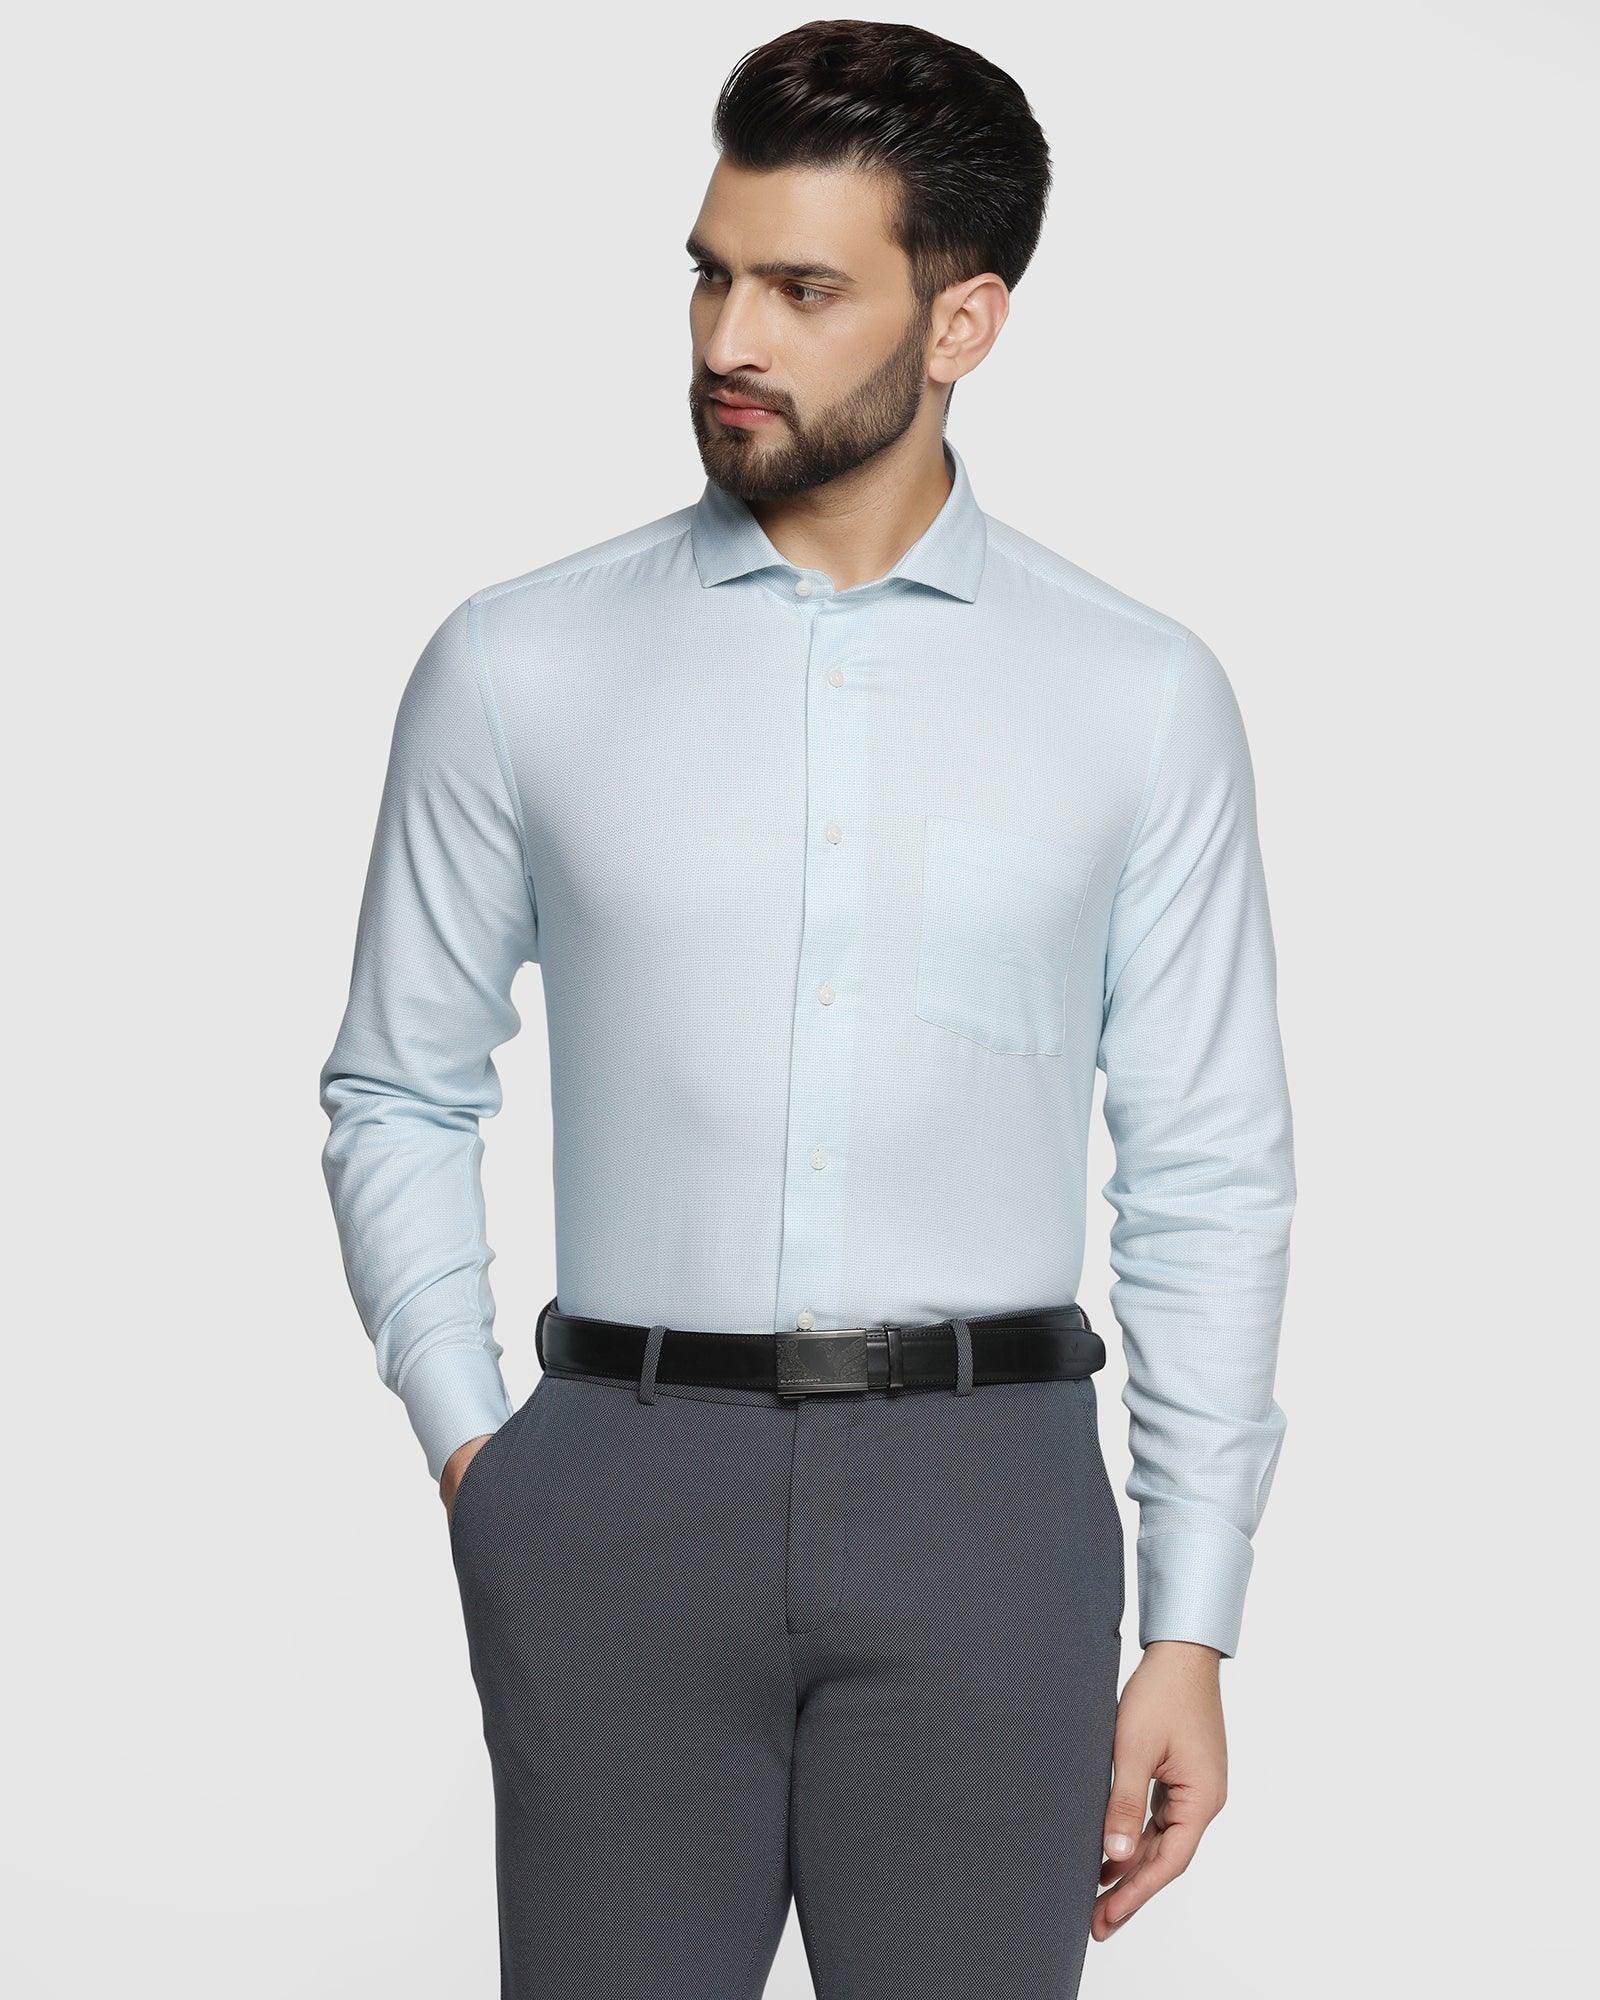 textured formal shirt in light blue (seiko)